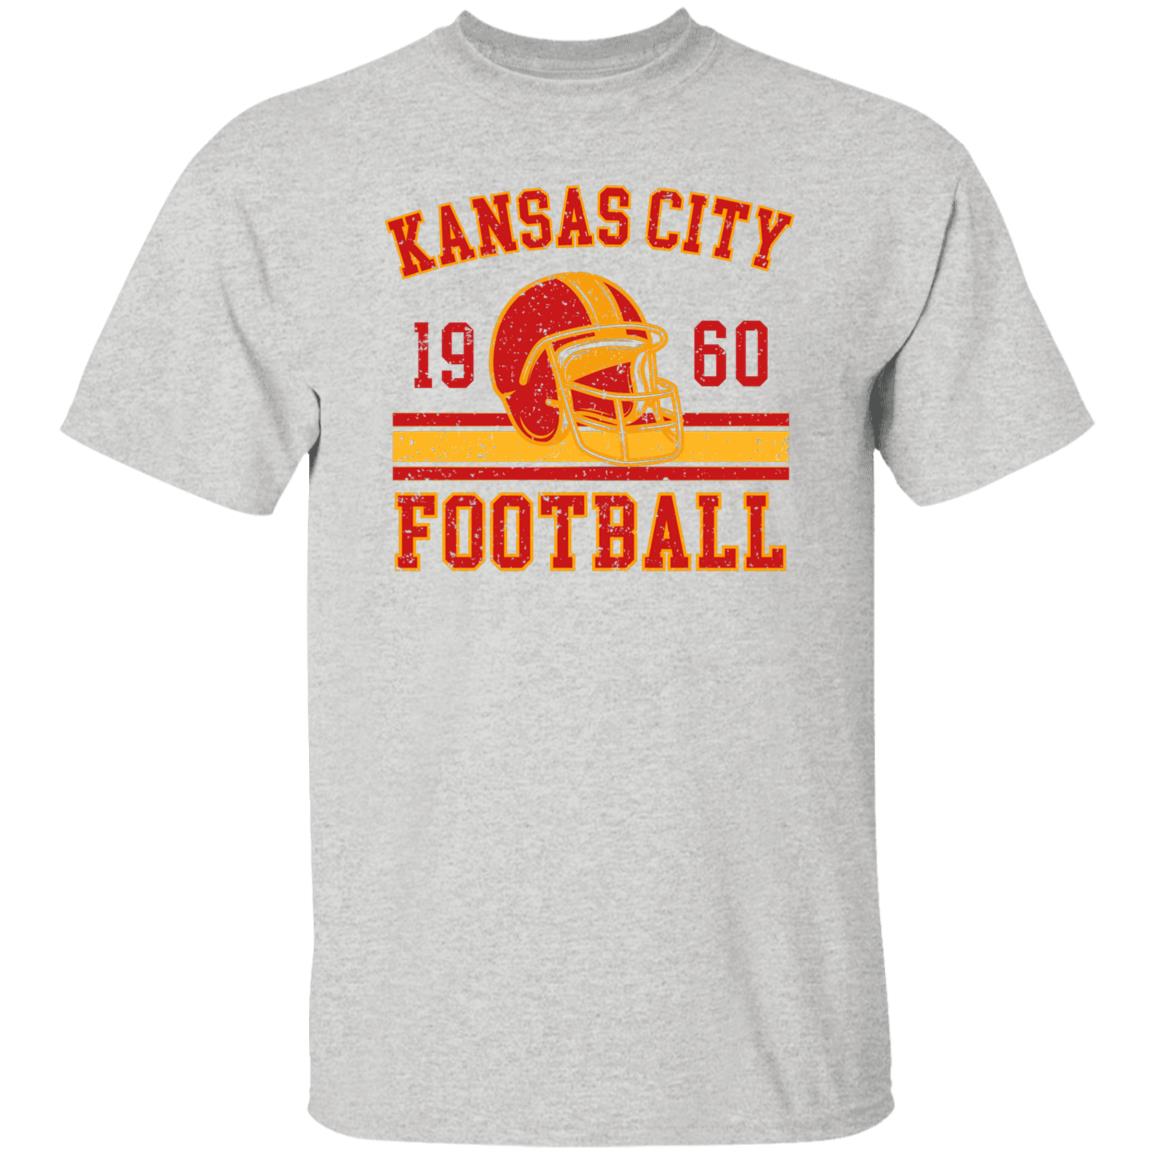 Kansas City Vintage Style T-Shirt